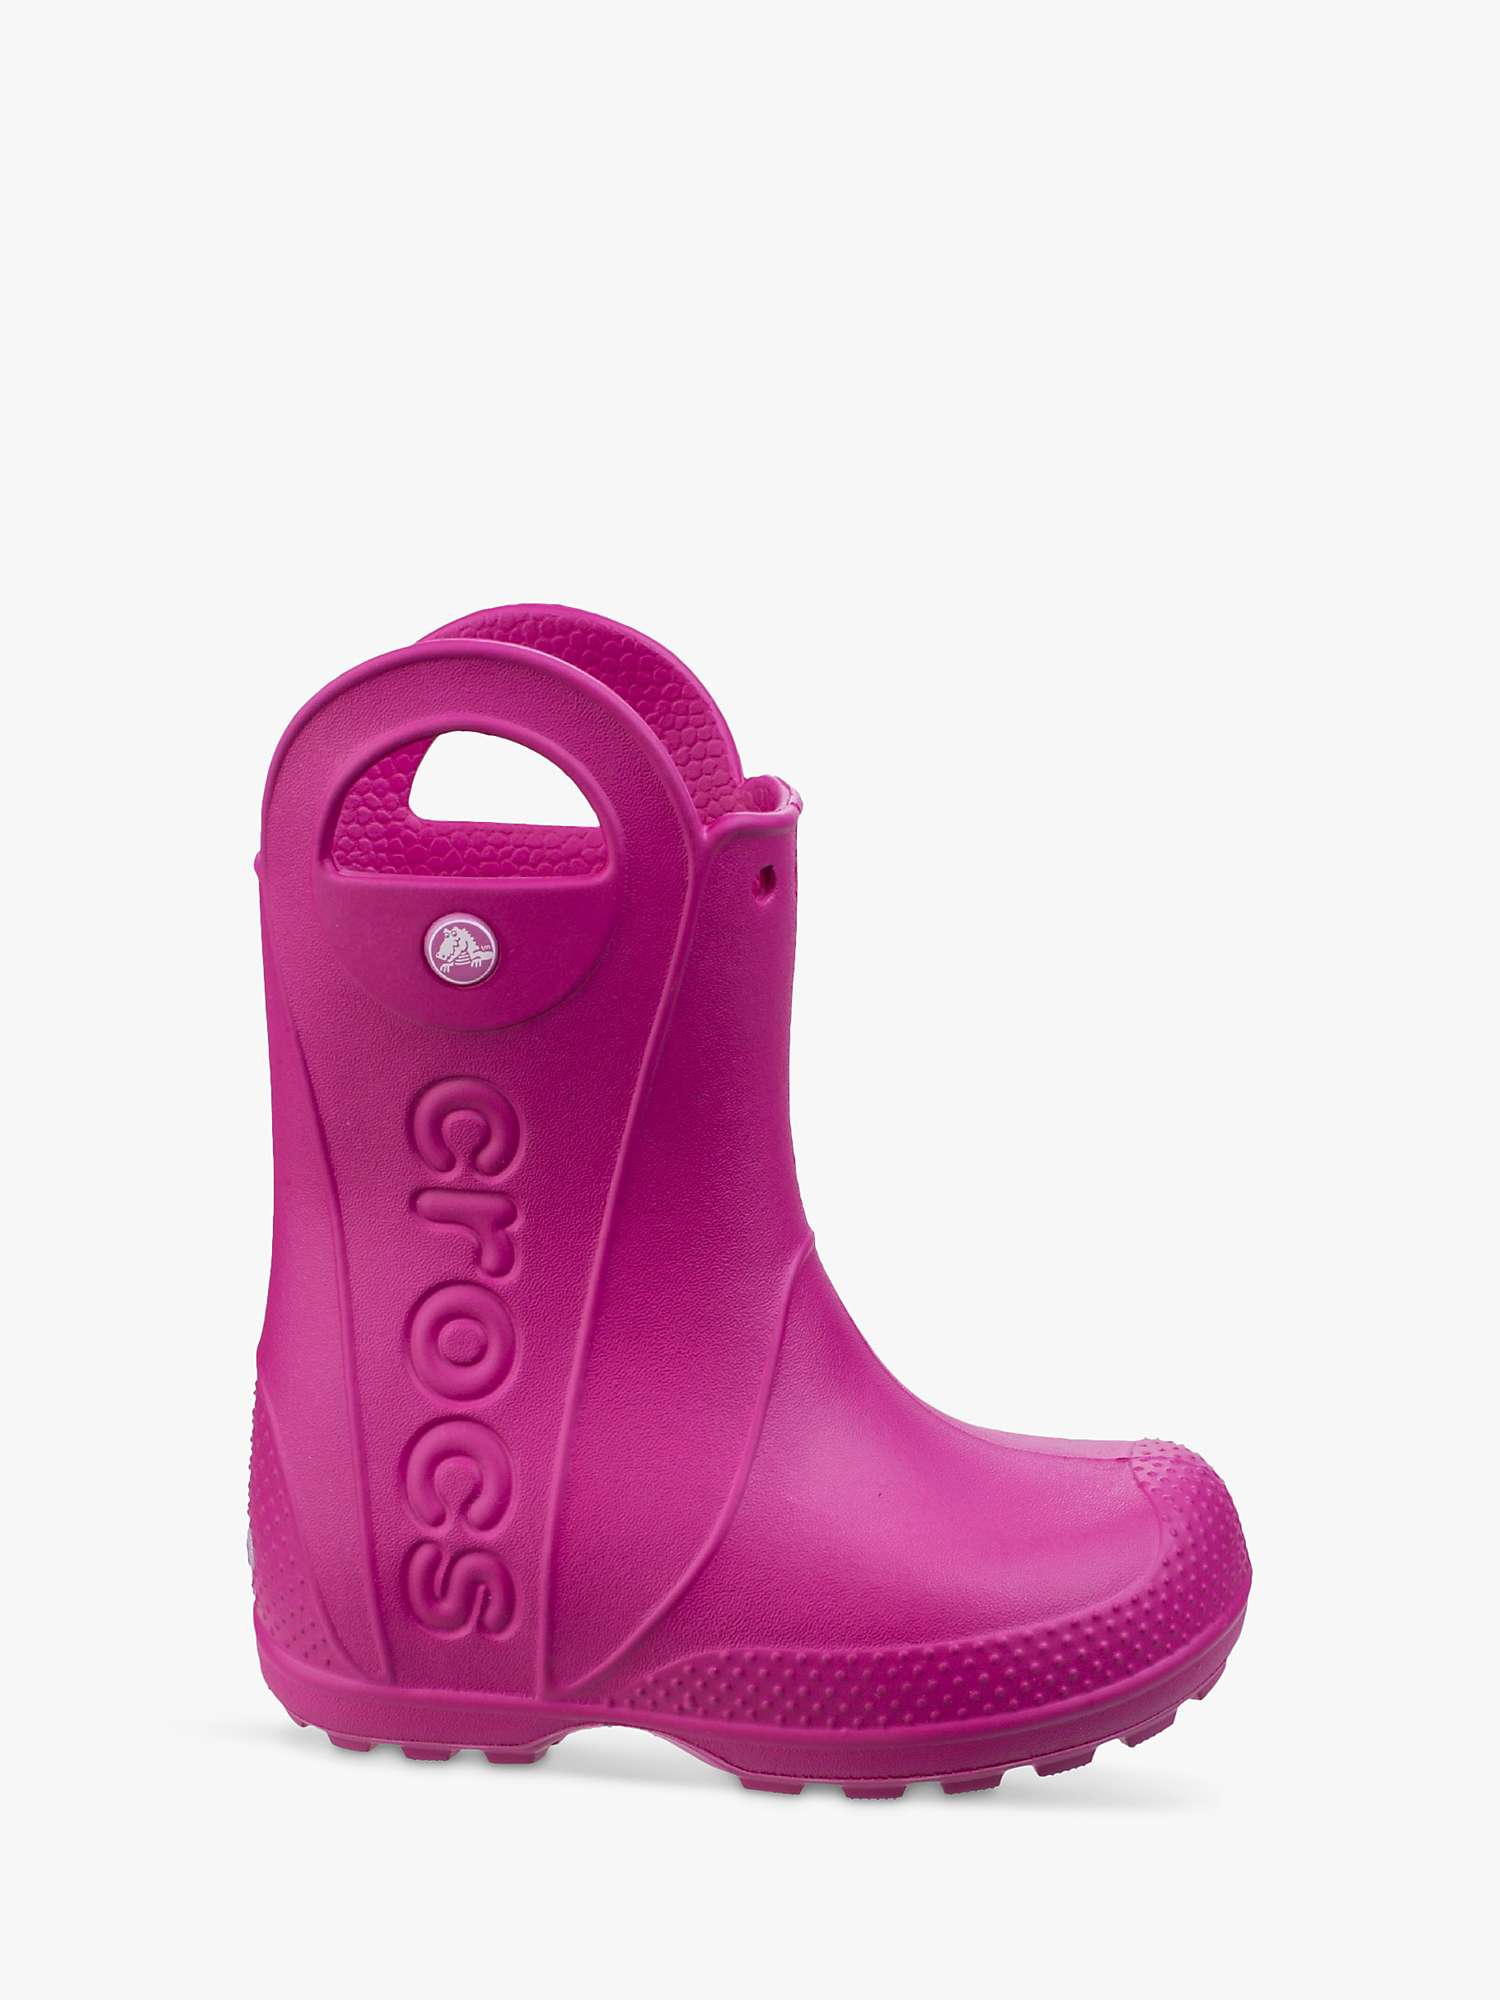 Buy Crocs Kids' Handle It Rain Wellington Boots Online at johnlewis.com